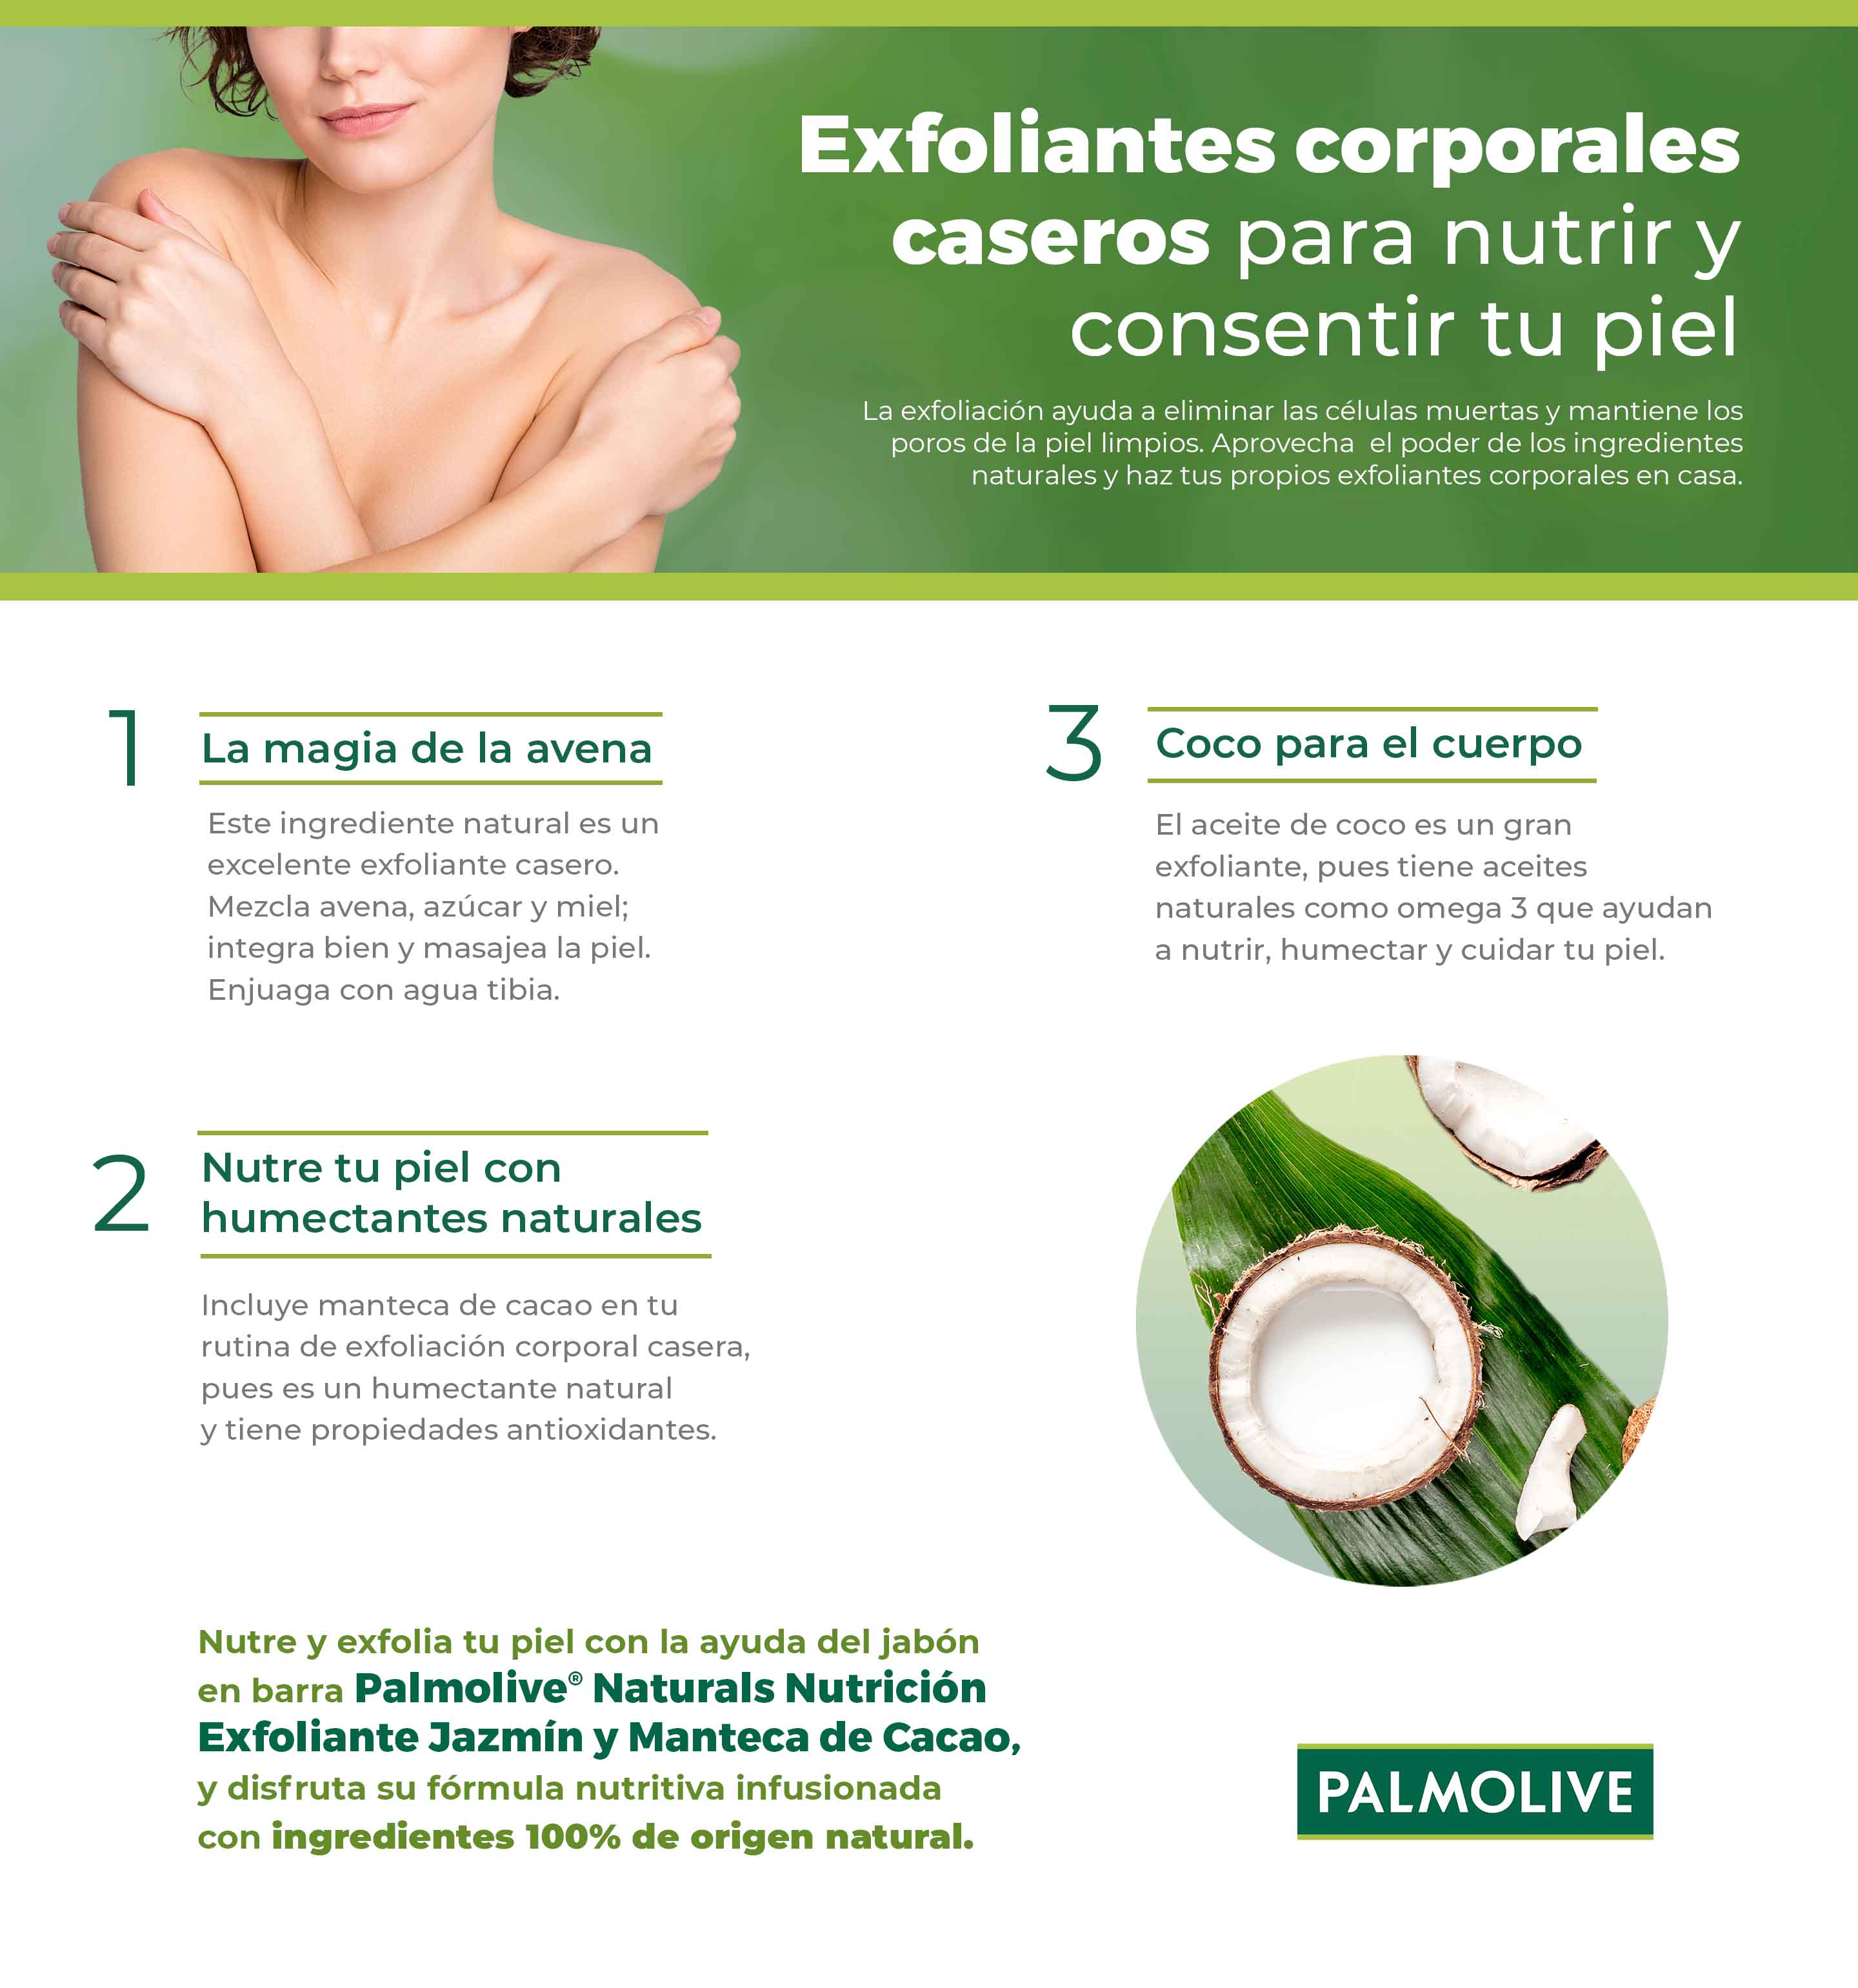 Exfoliantes caseros para consentir tu piel | Palmolive